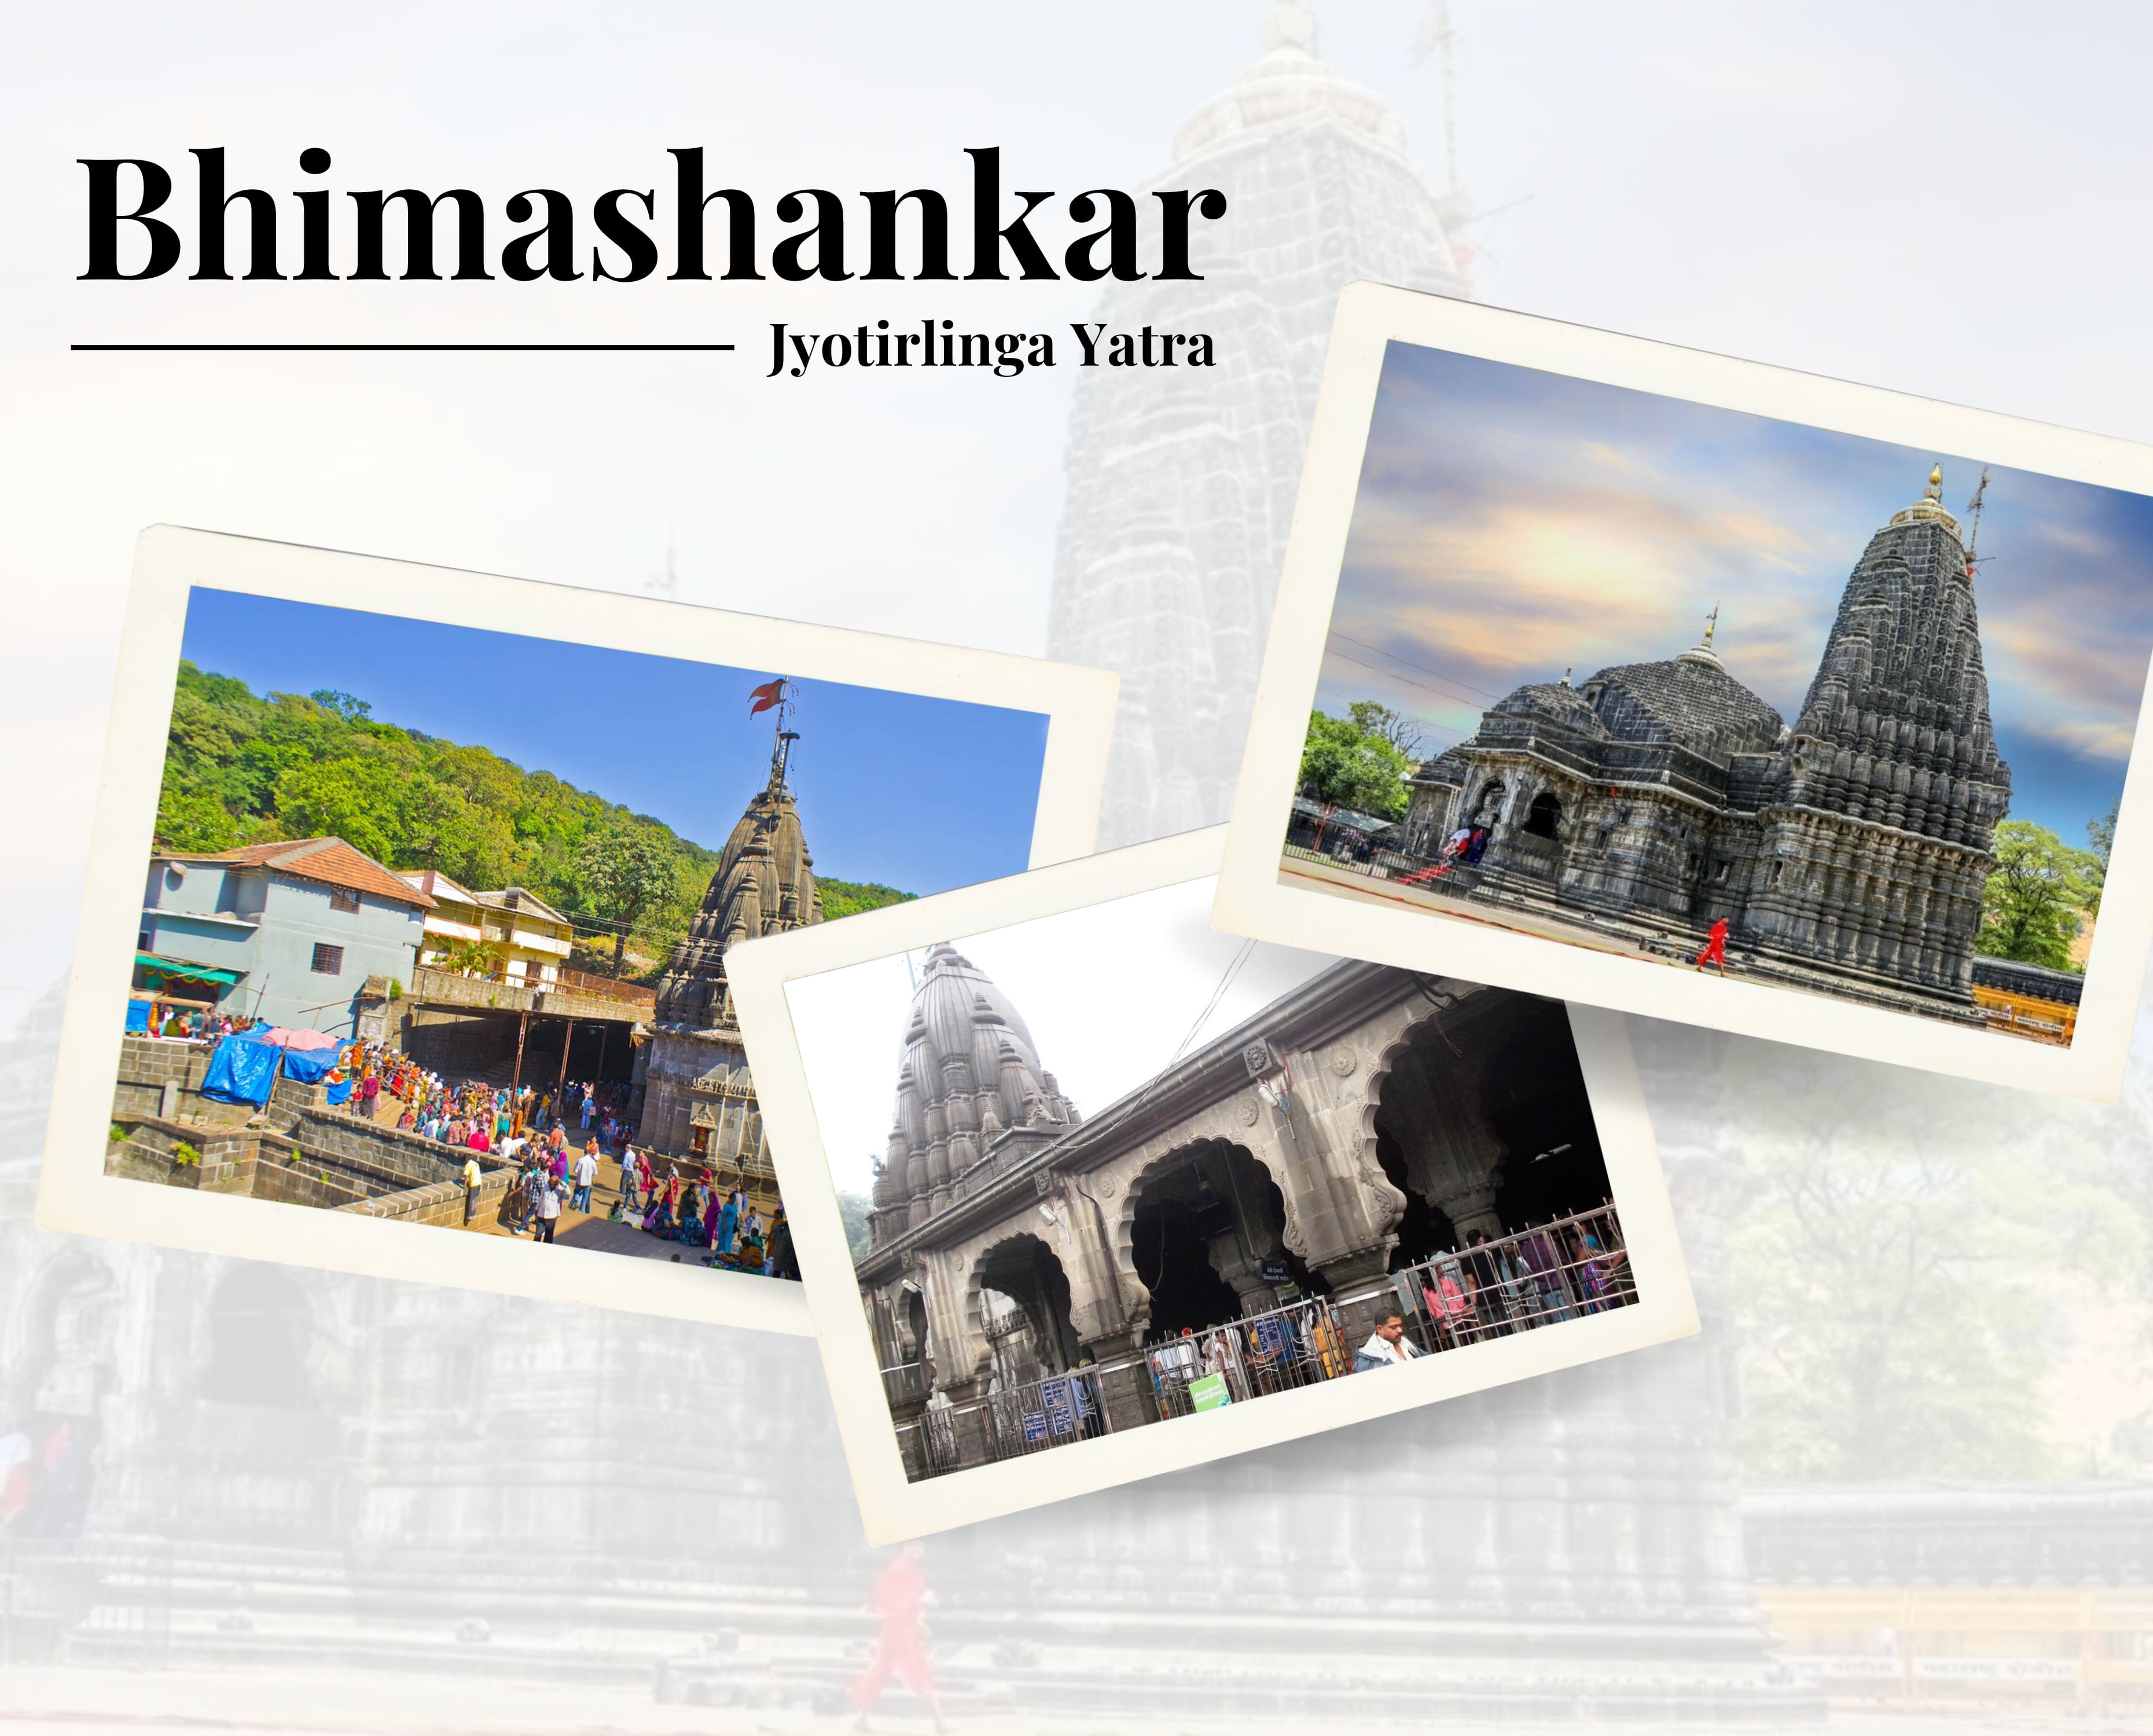 Hire a Tempo Traveller on rent For Bhimashankar Jyotirlinga Yatra